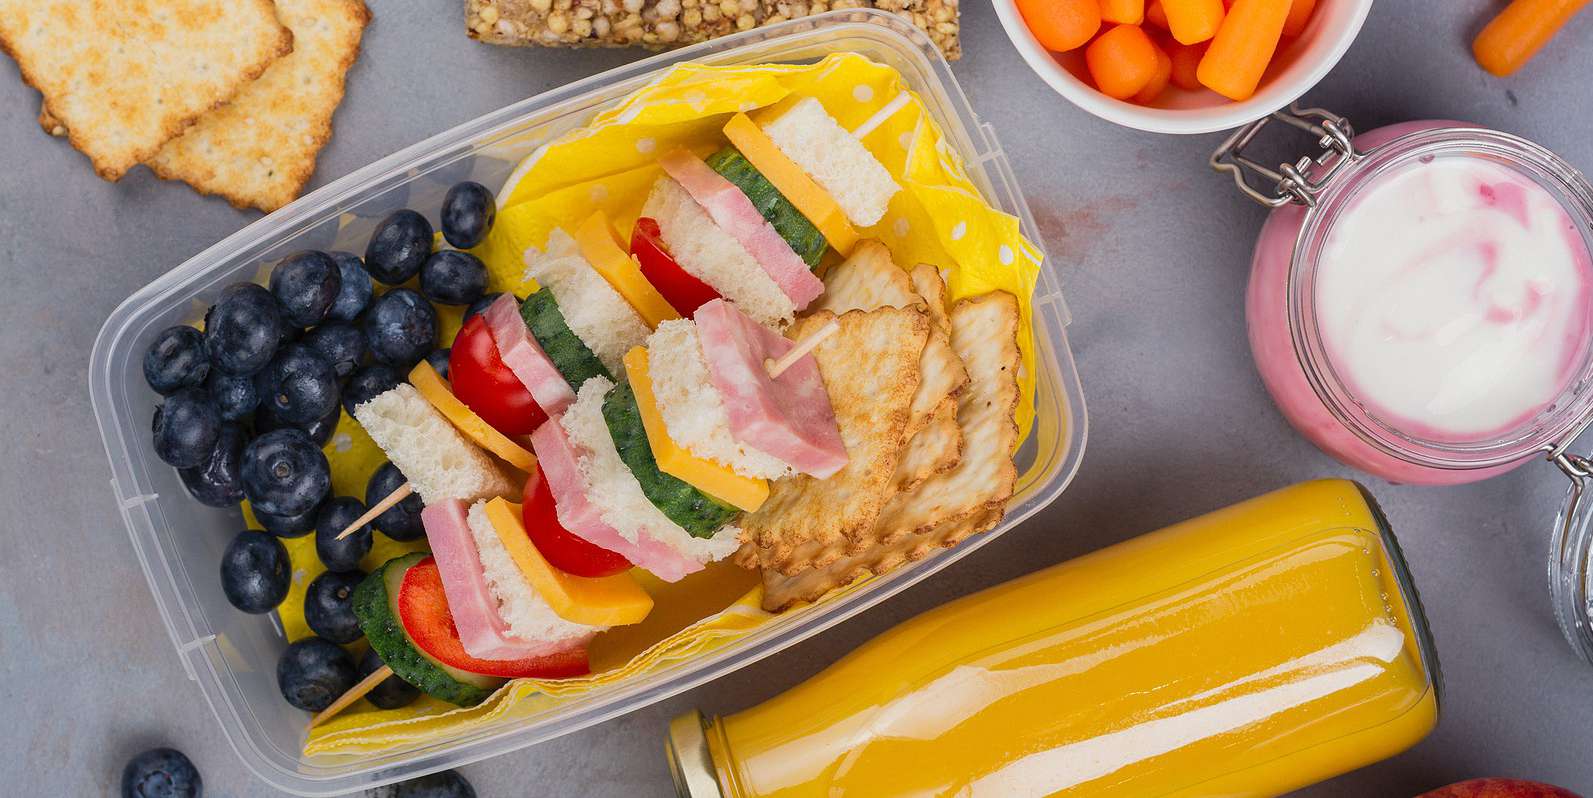 Sandwich Kebobs Bento Box